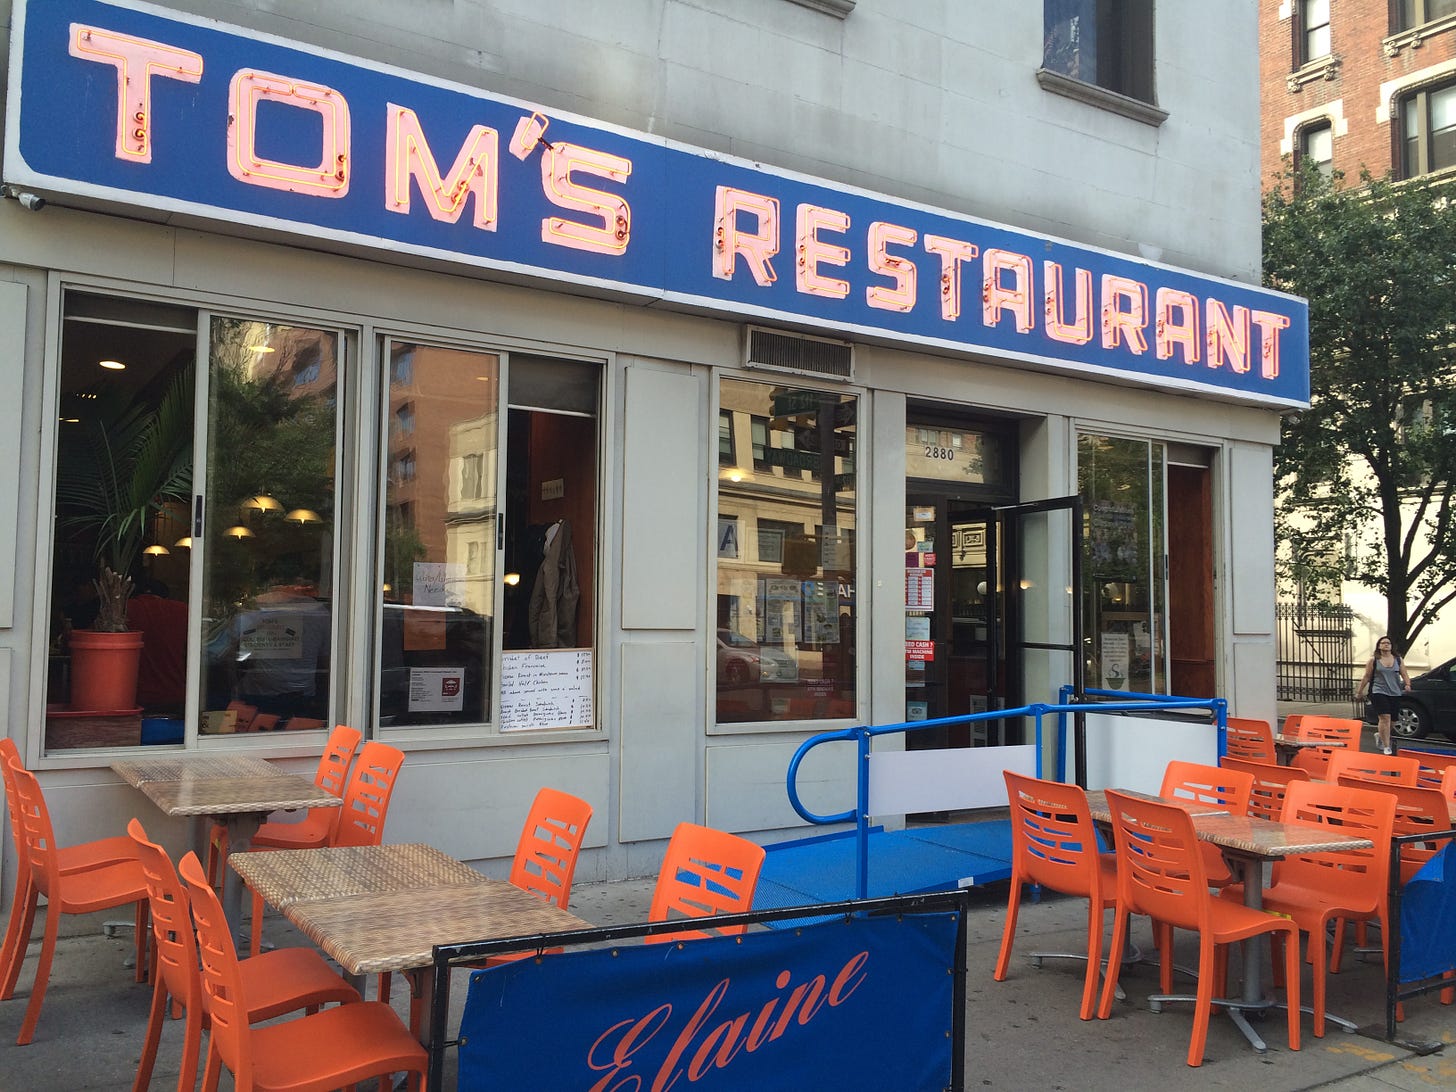 Tom's Restaurant – a closer look at a historic New York diner